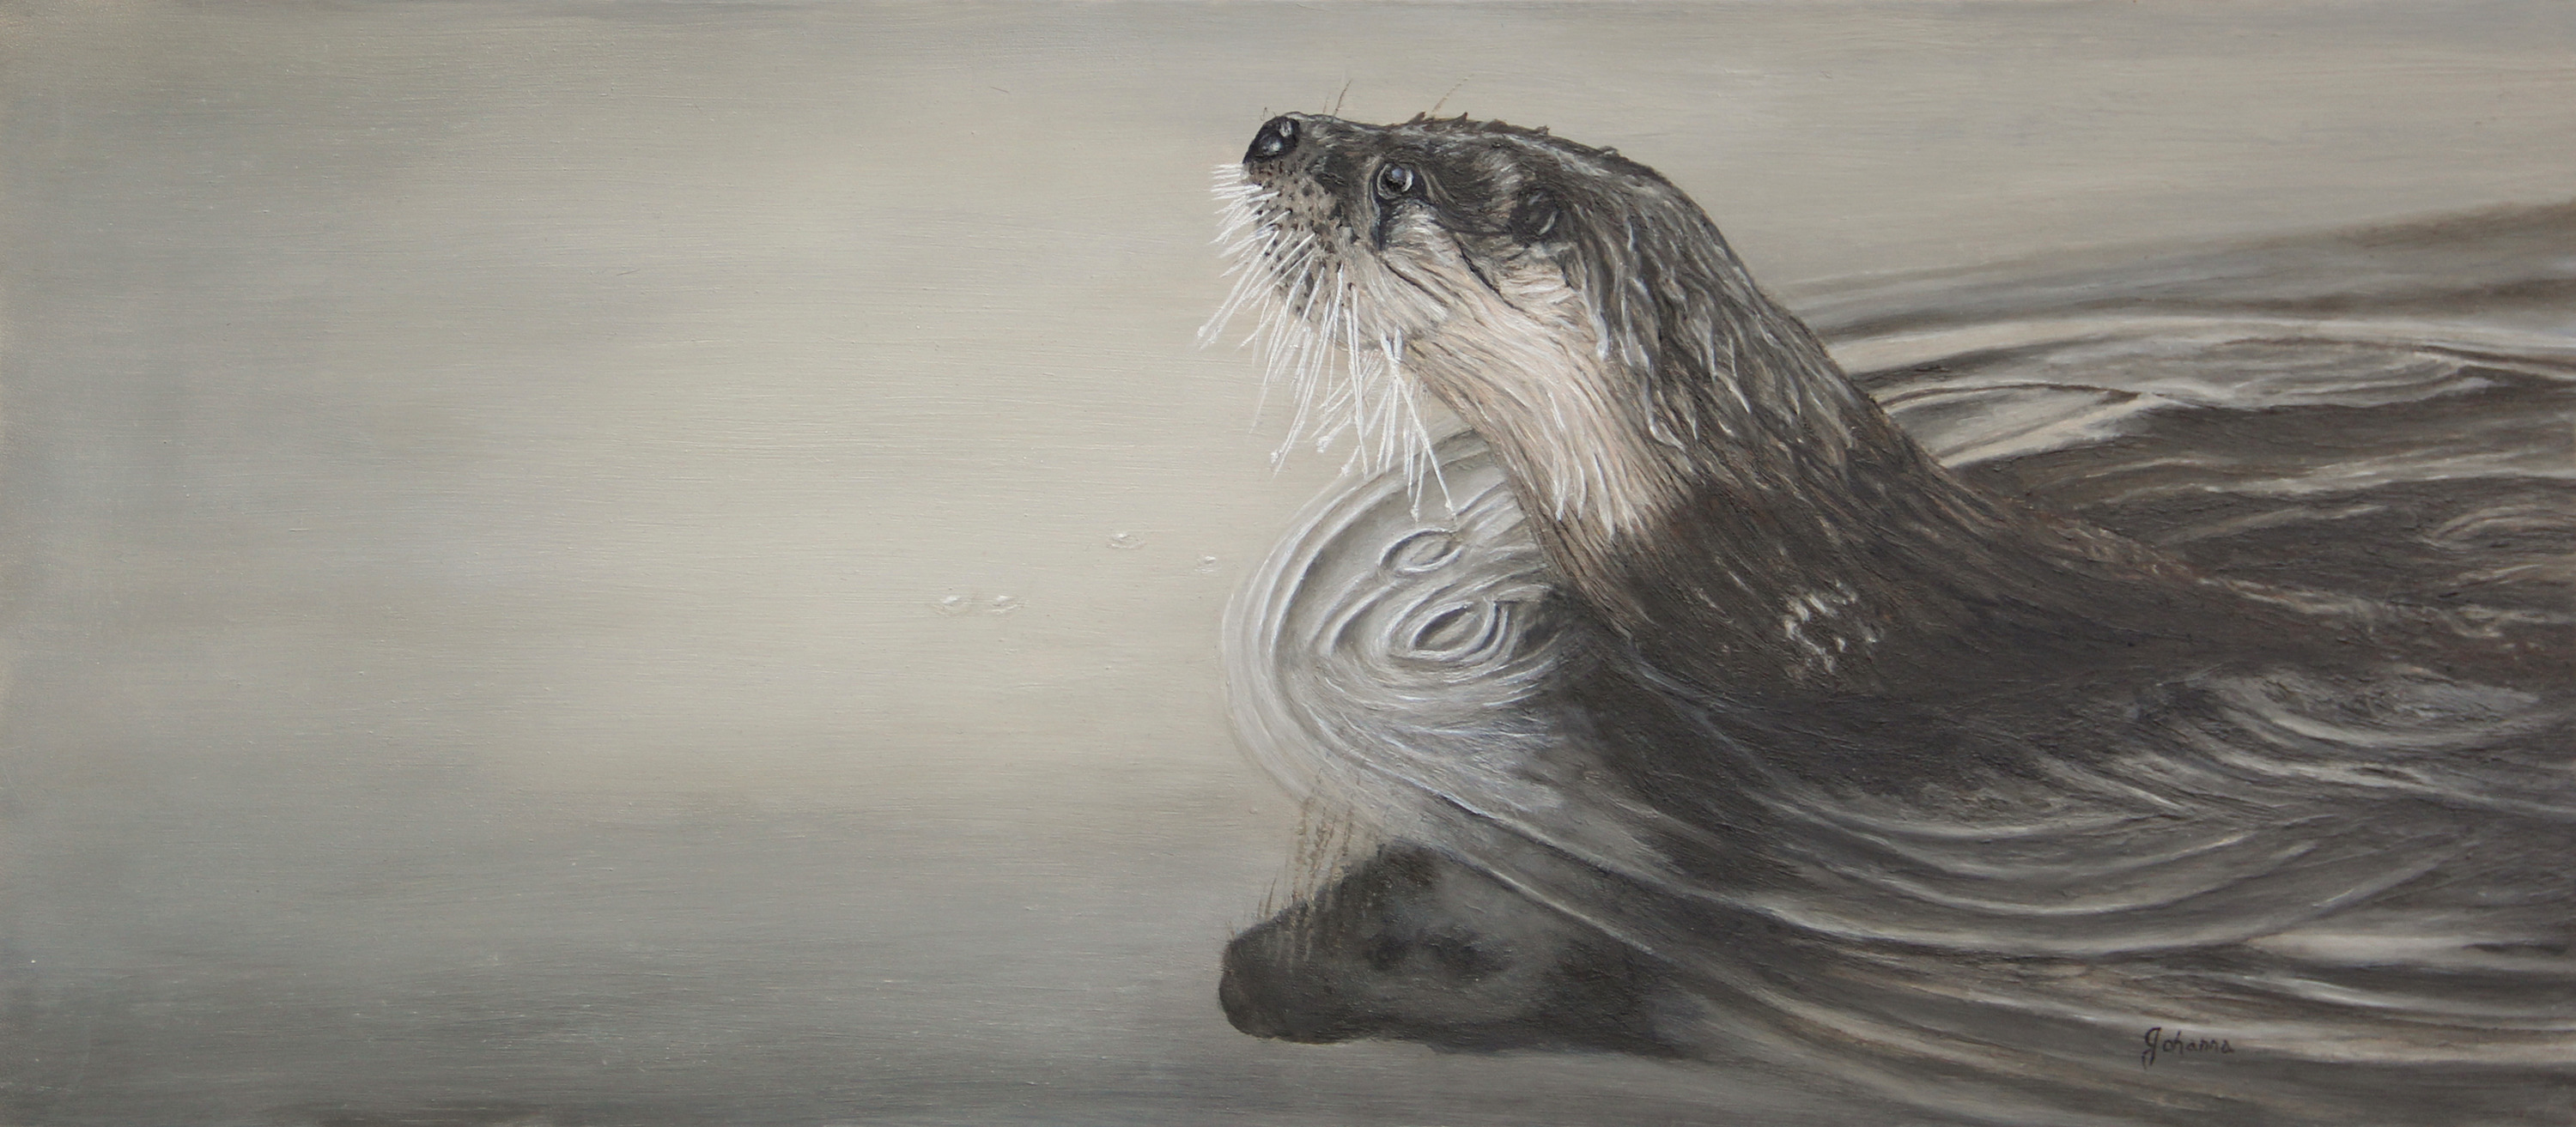 Johanna lerwick   making ripples   river otter 8.75x20  1600 qkv0a8